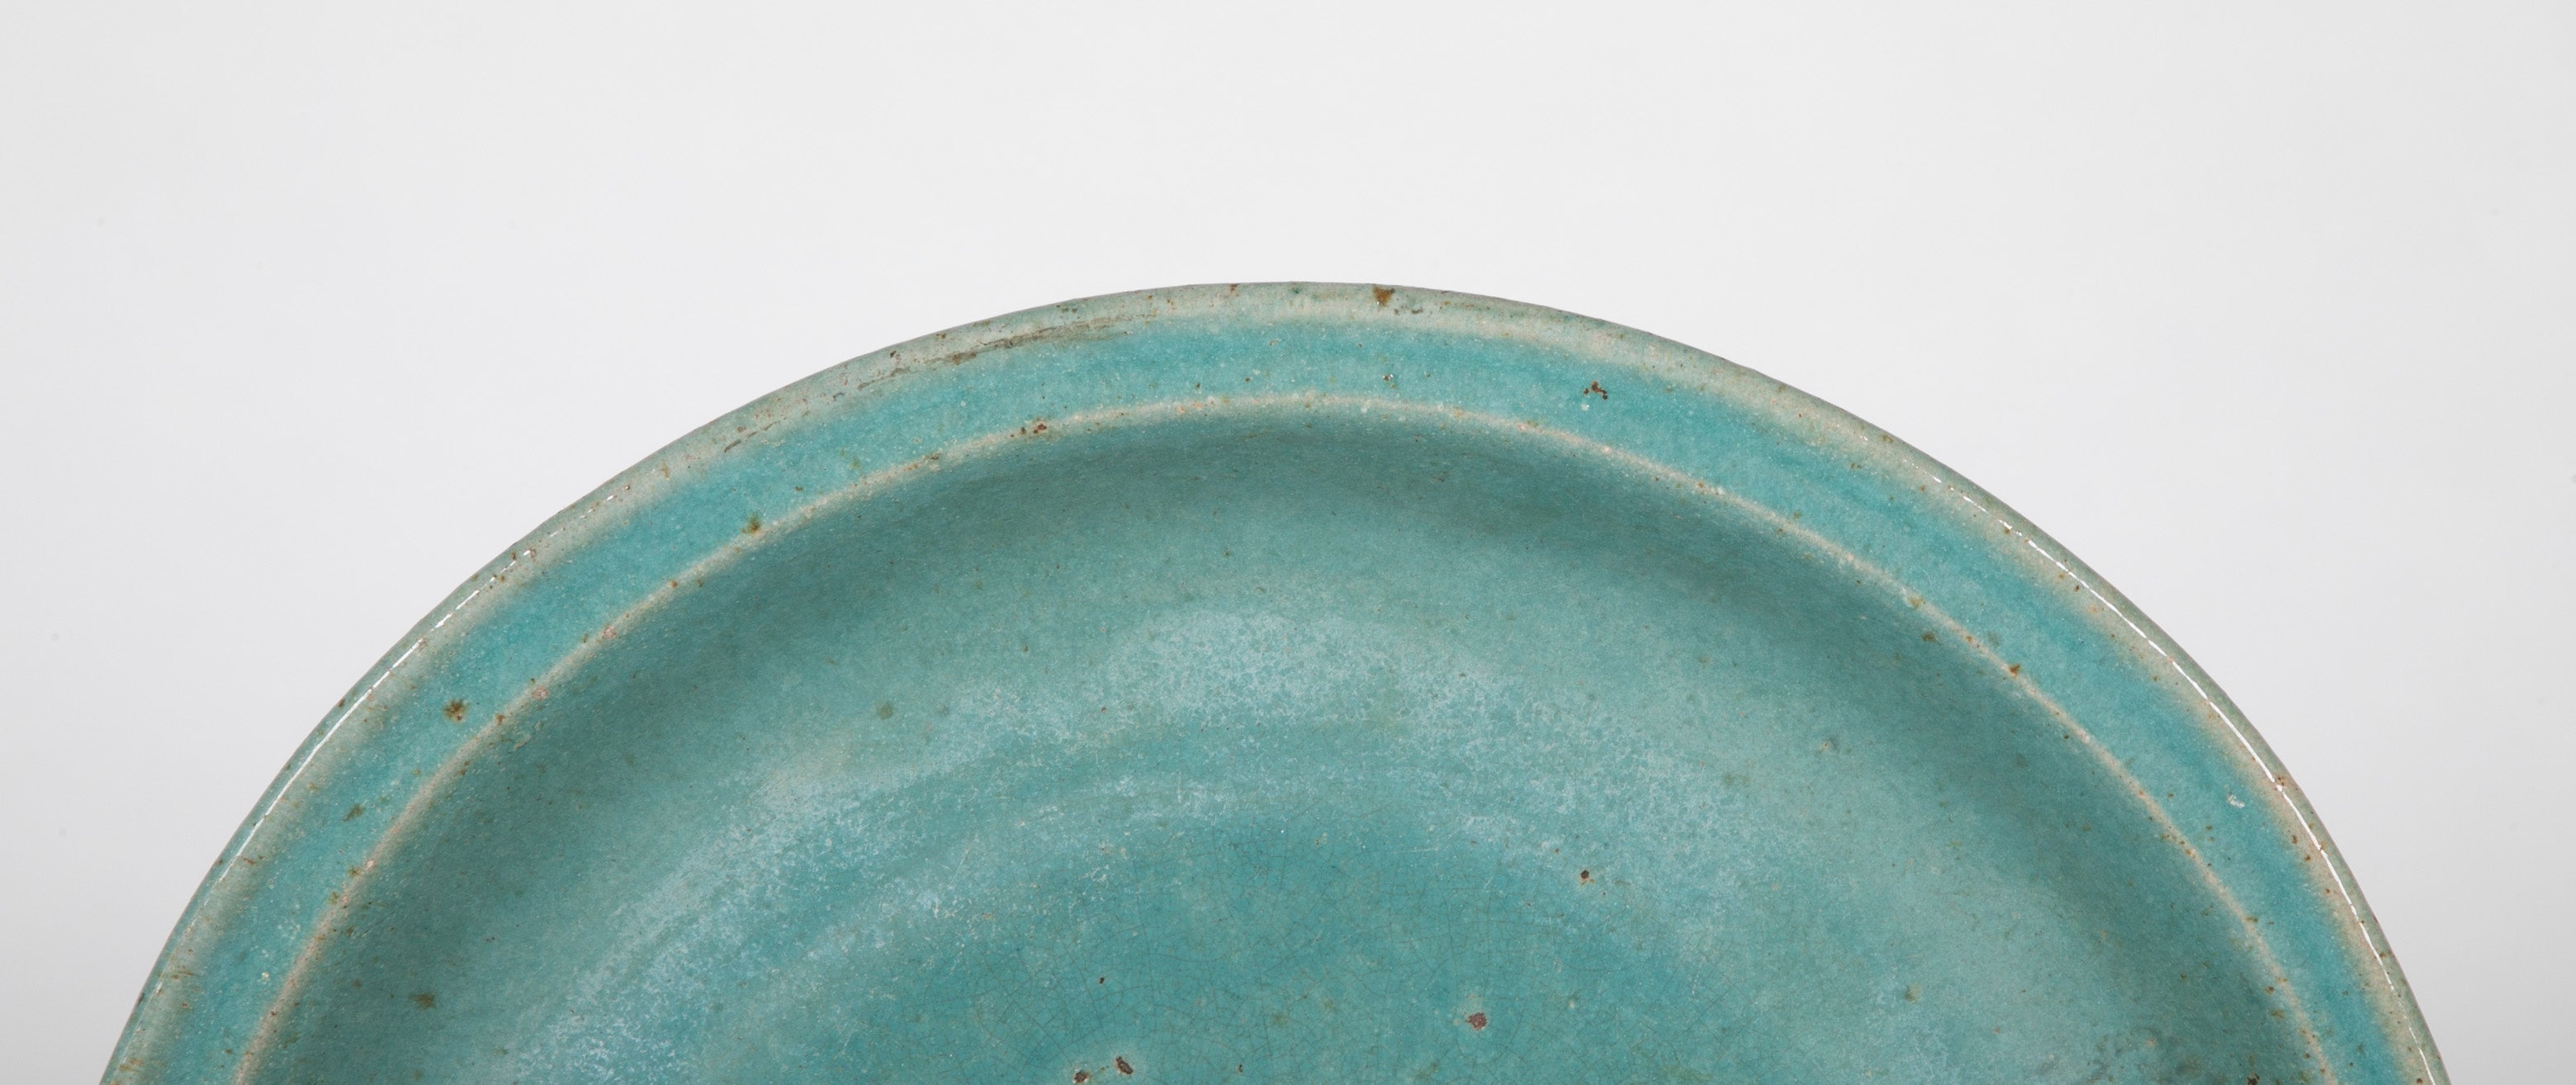 Large Chinese Stoneware Charger with Turquoise Glaze